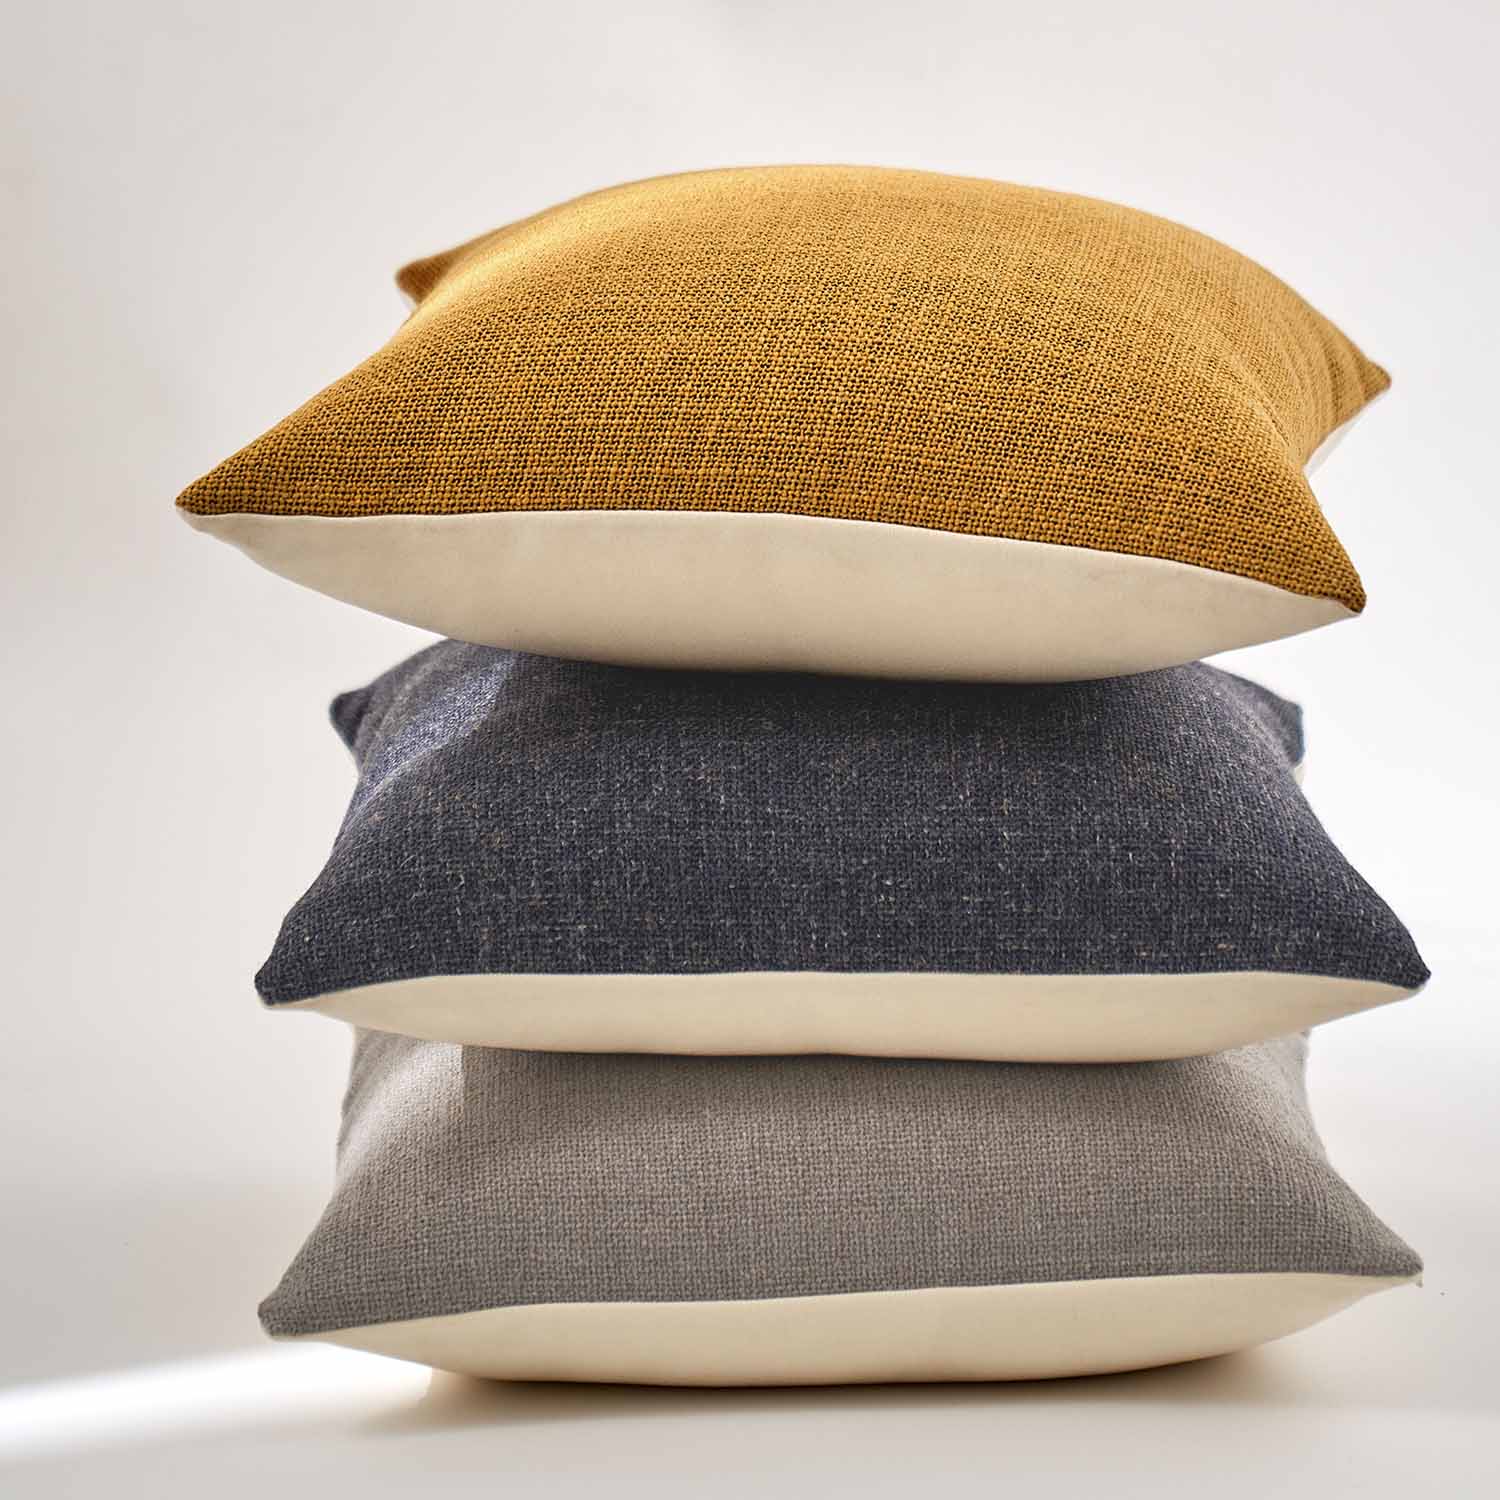 Savona Textured Linen Pillow Cover- linen body pillow cover